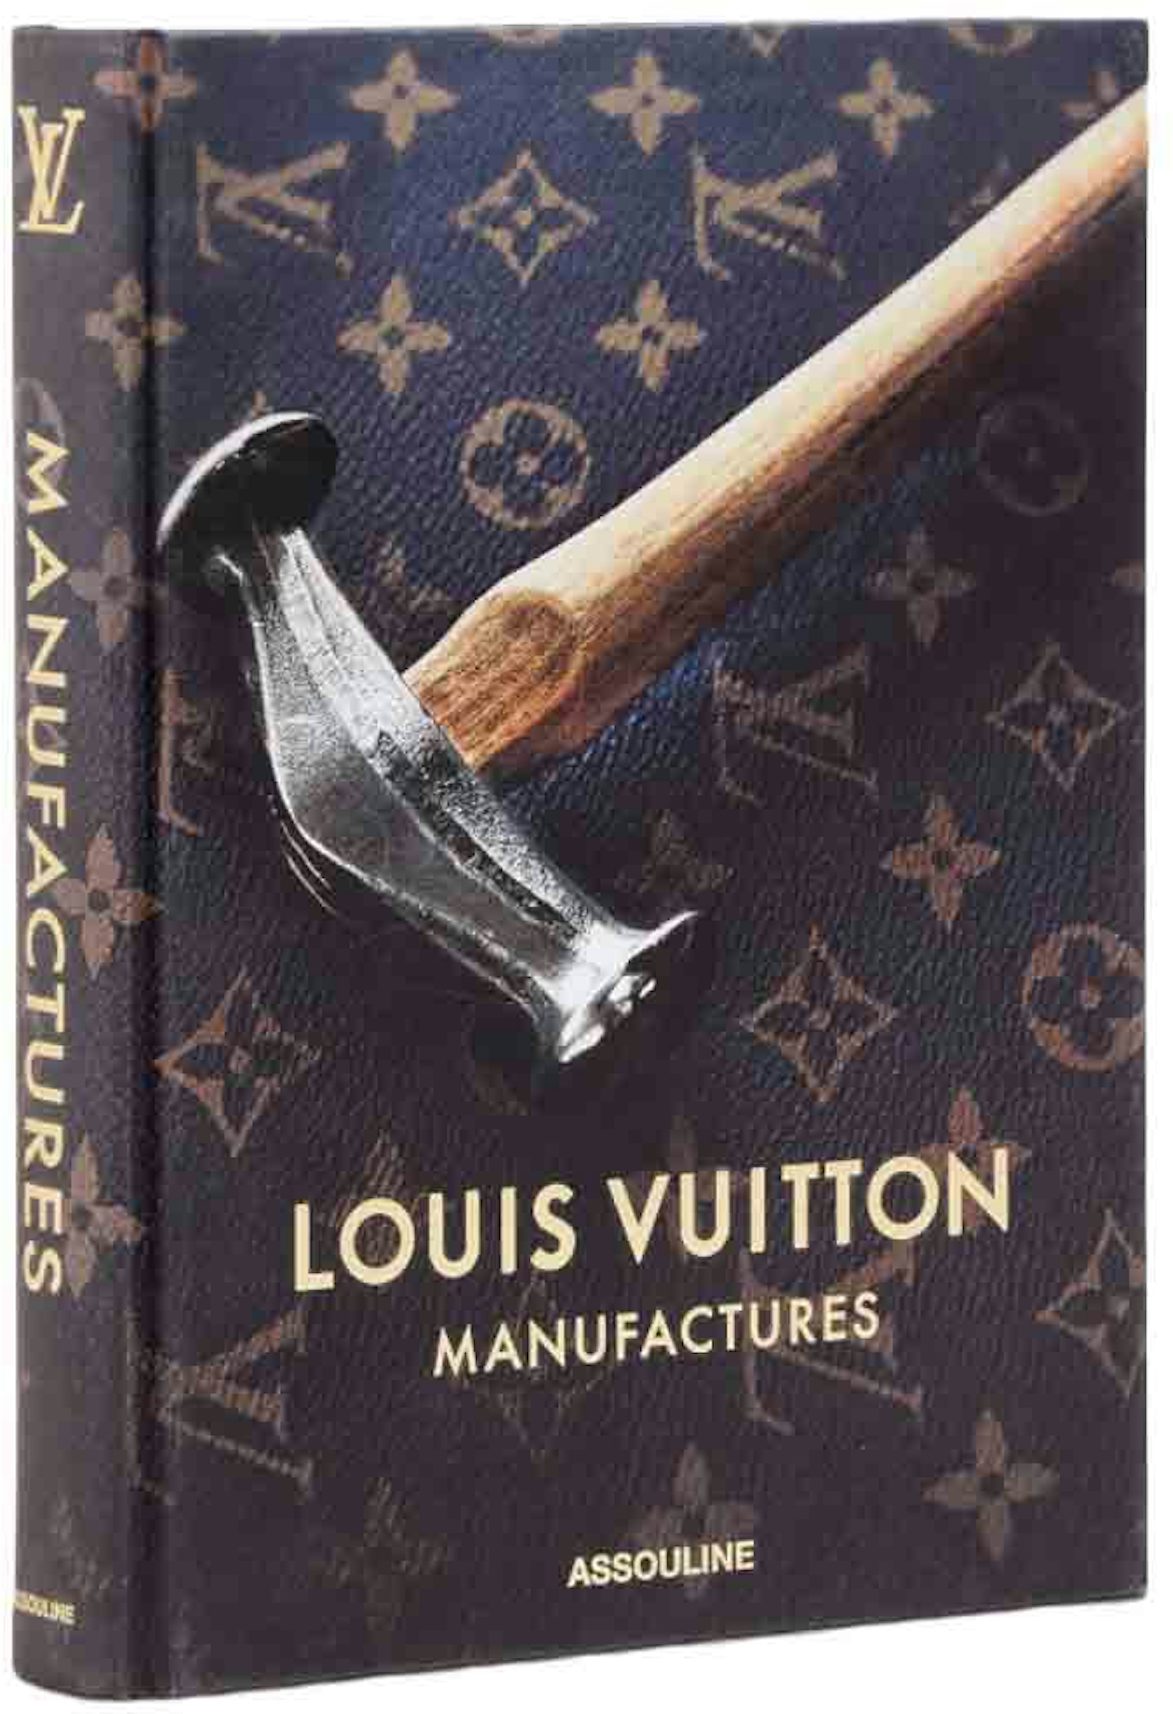 Louis Vuitton: Virgil Abloh' English Hardcover Release Info